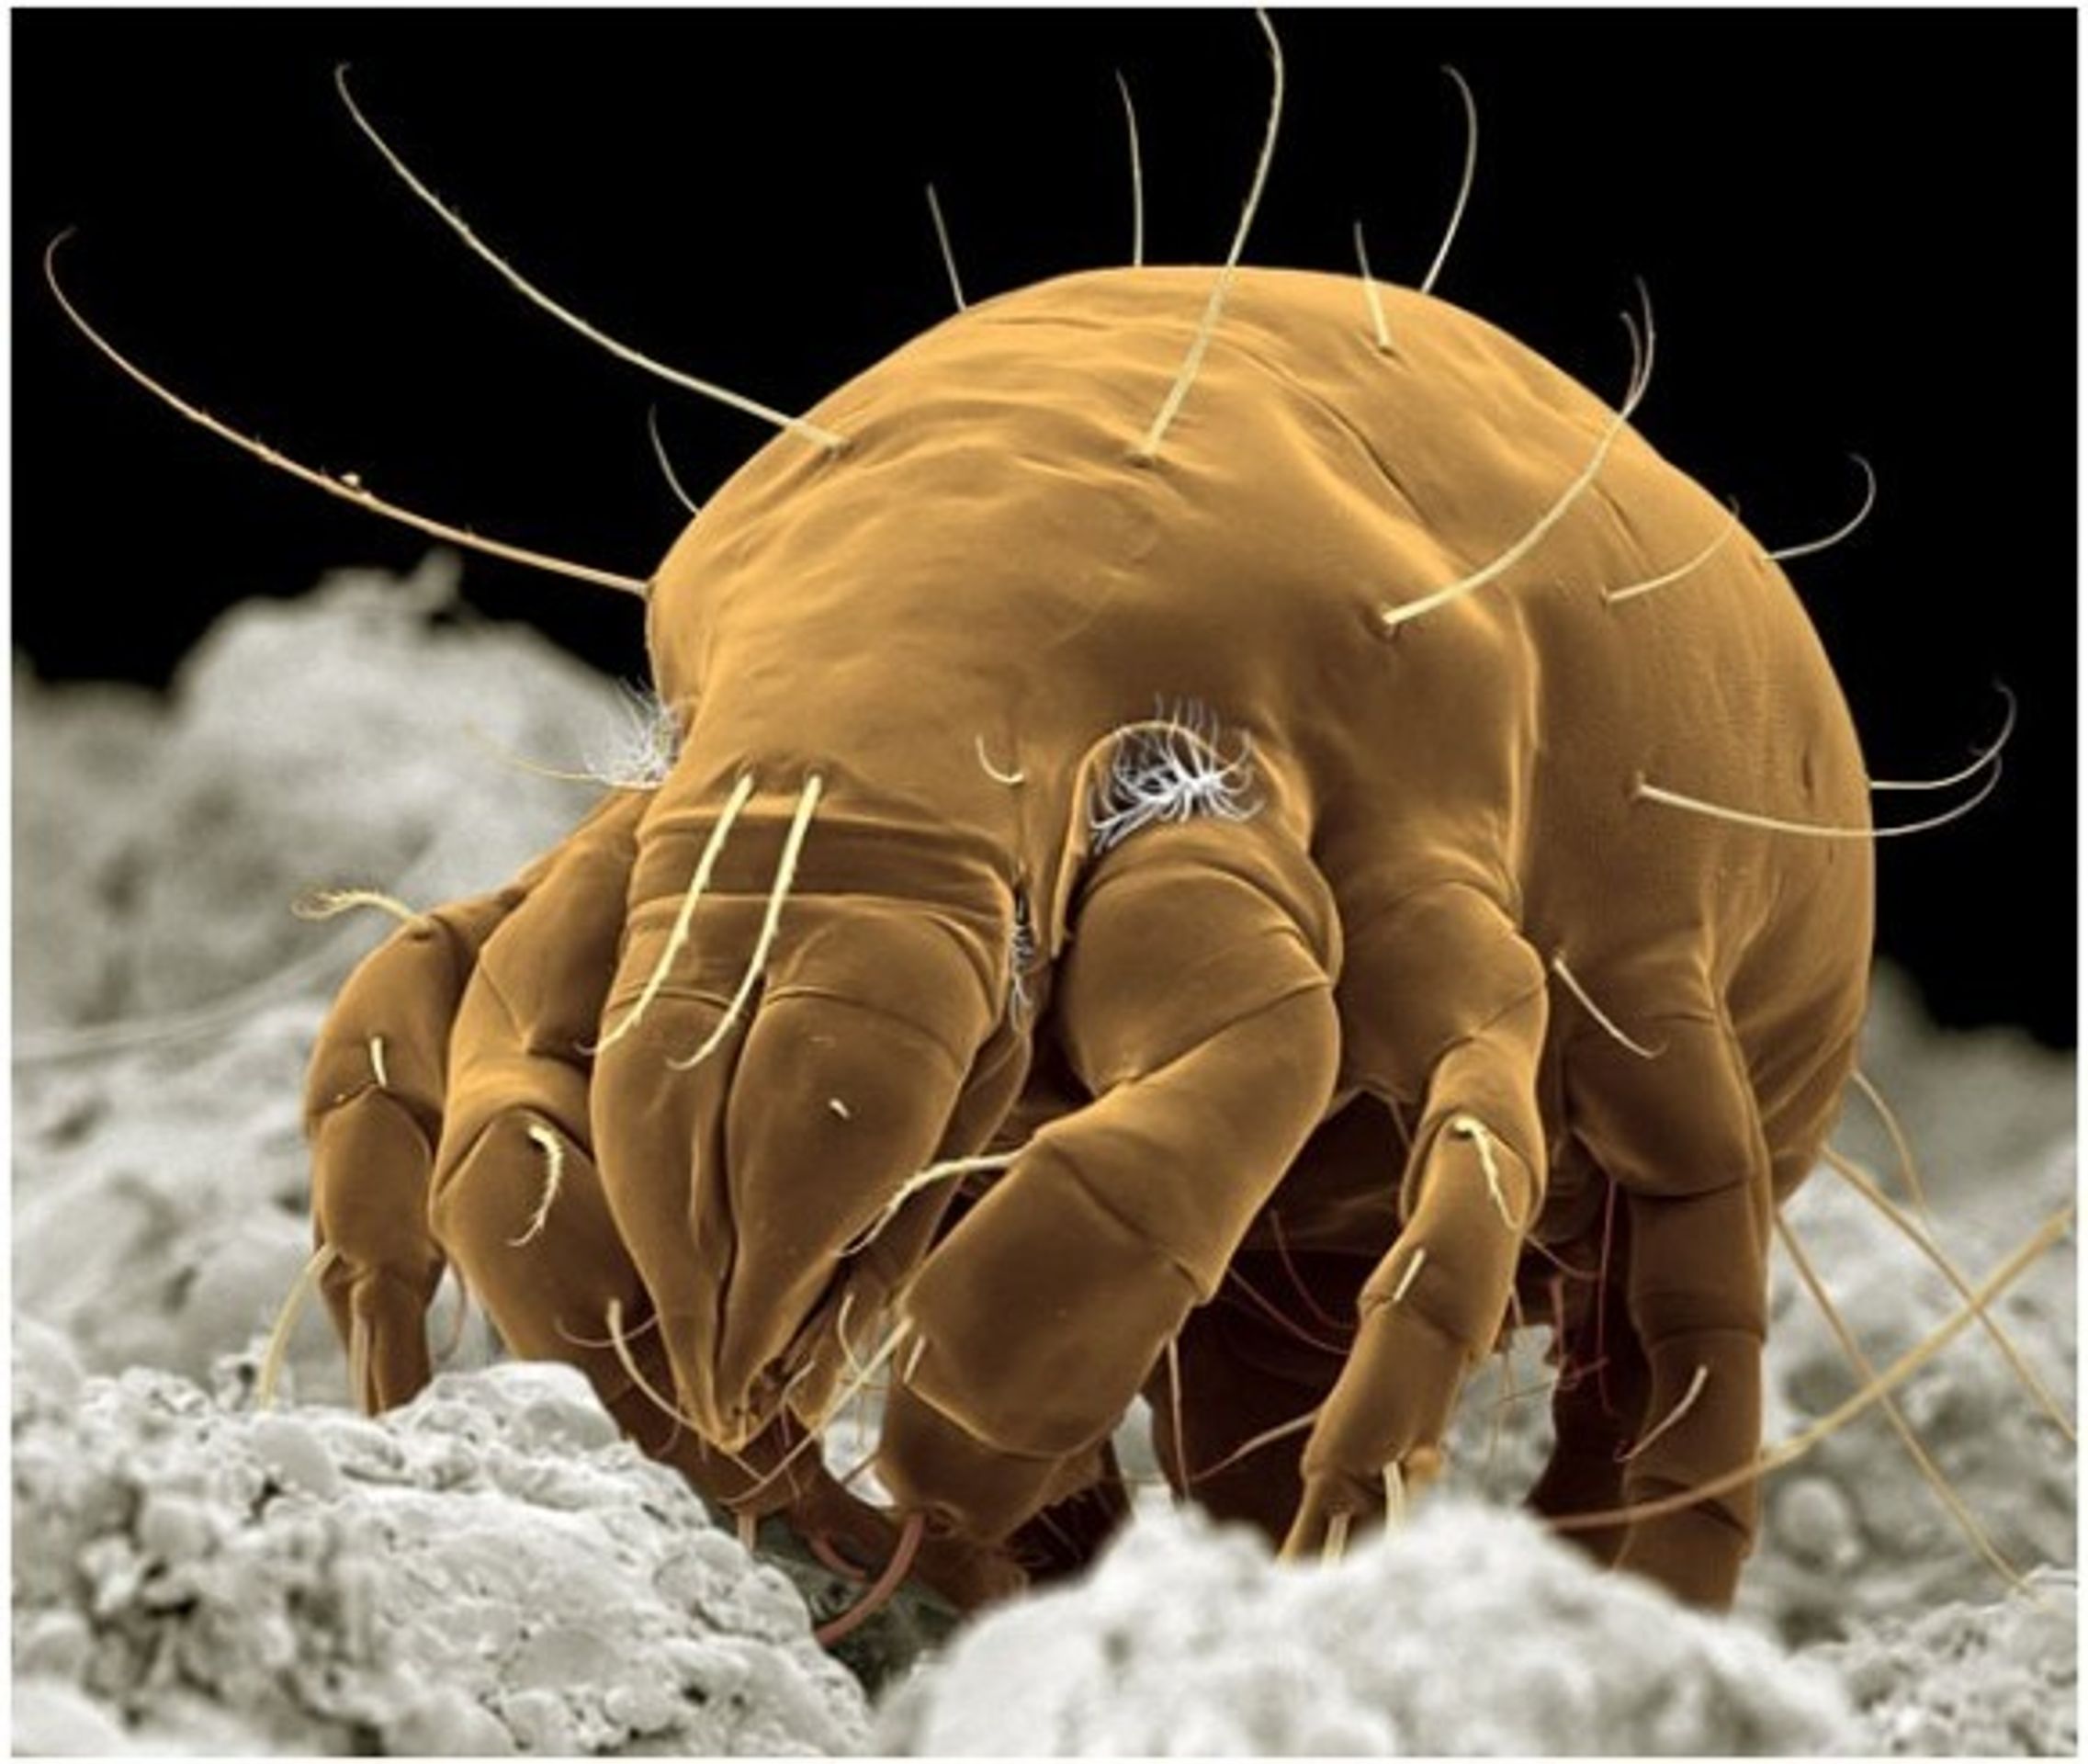 Hmyz pod elektronovým mikroskopem - 10 - GALERIE: Hmyz pod elektronovým mikroskopem (12/20)